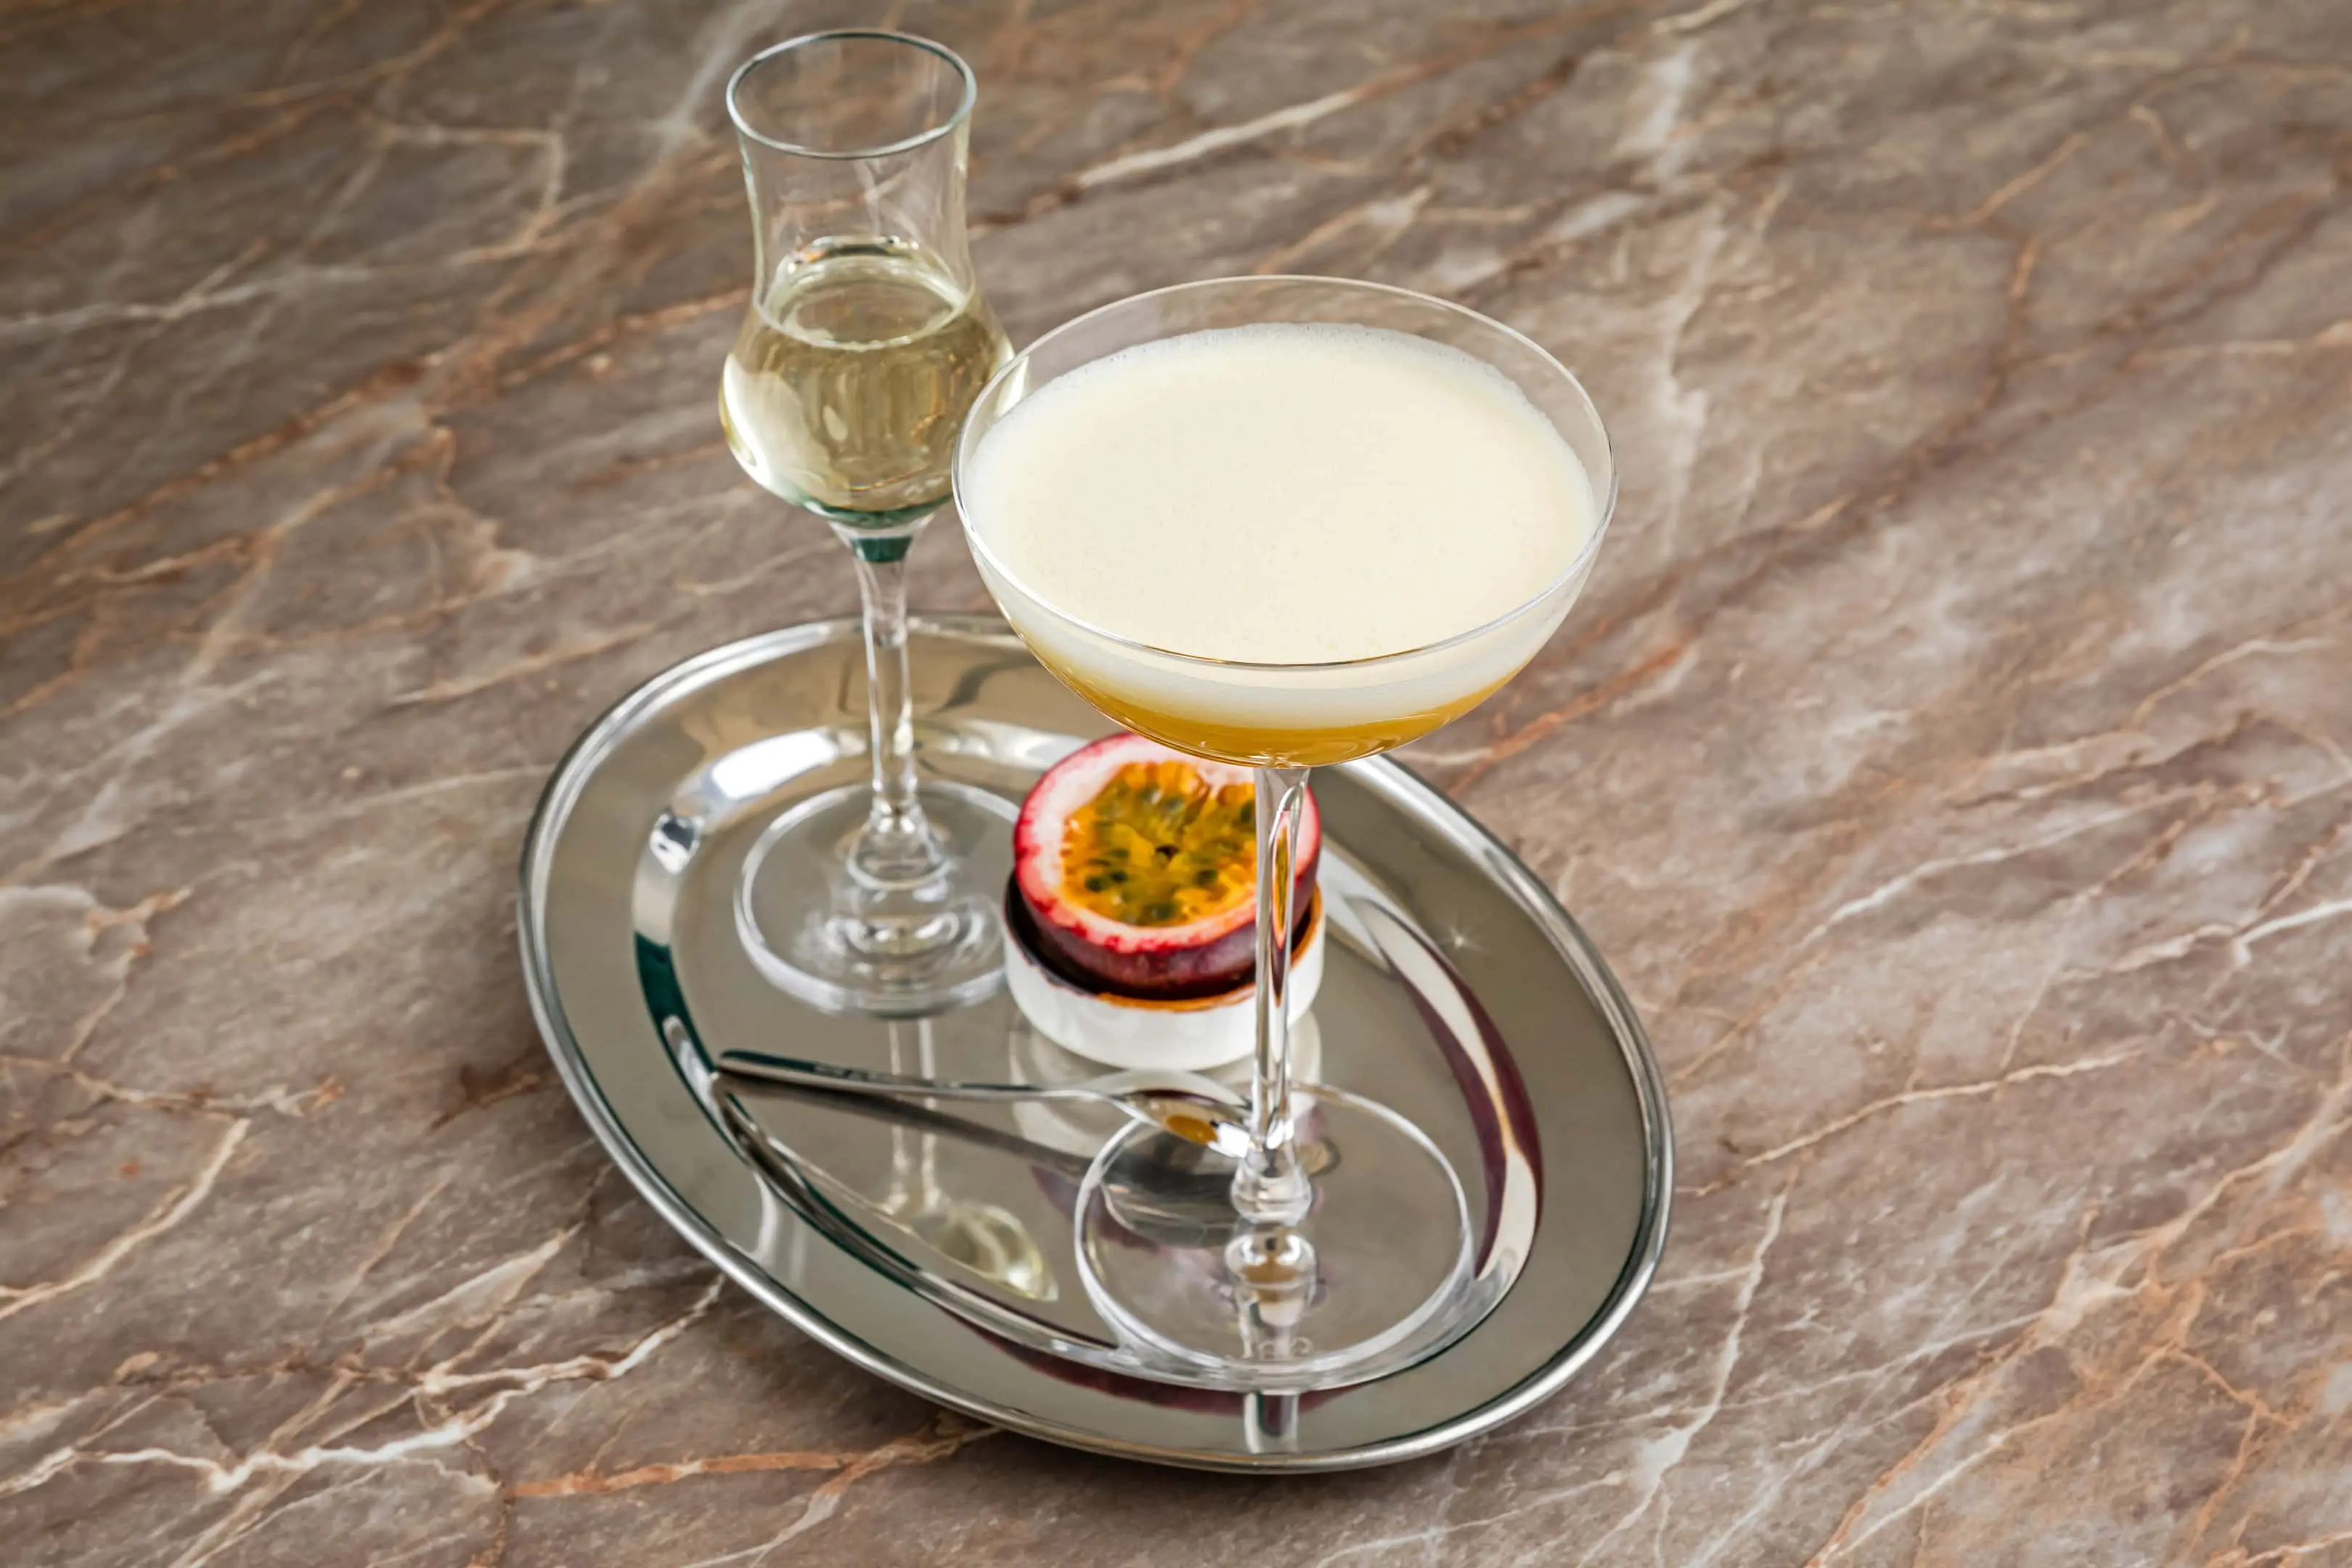 Pornstar martini cocktail with sparkling wine